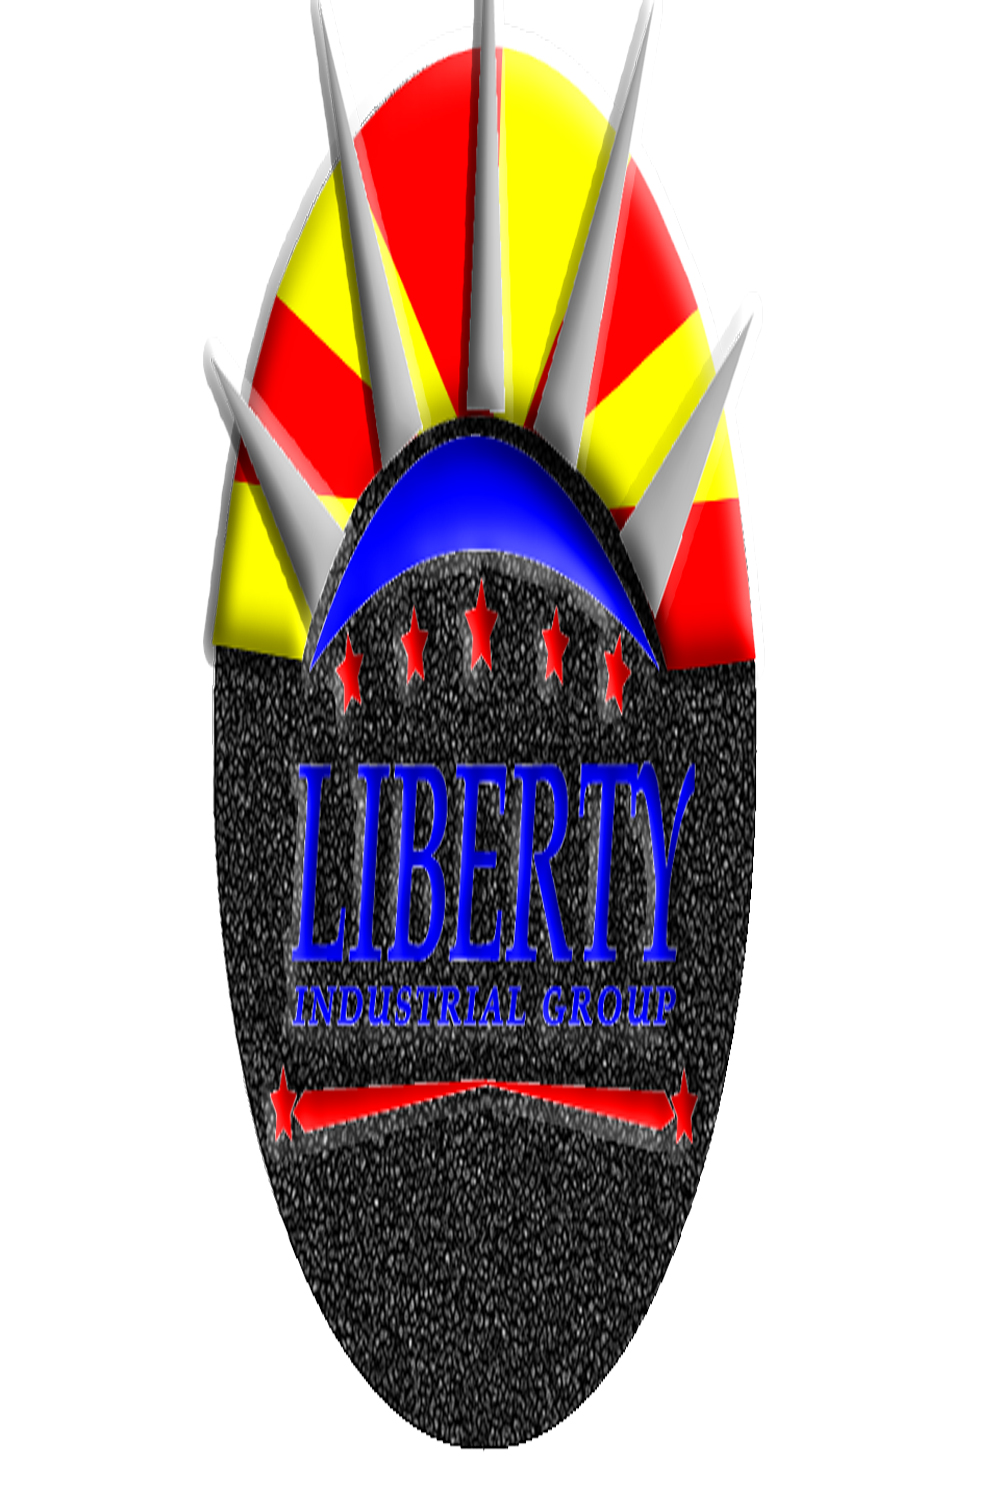 3D Industrial Emblem - Logo pinterest preview image.